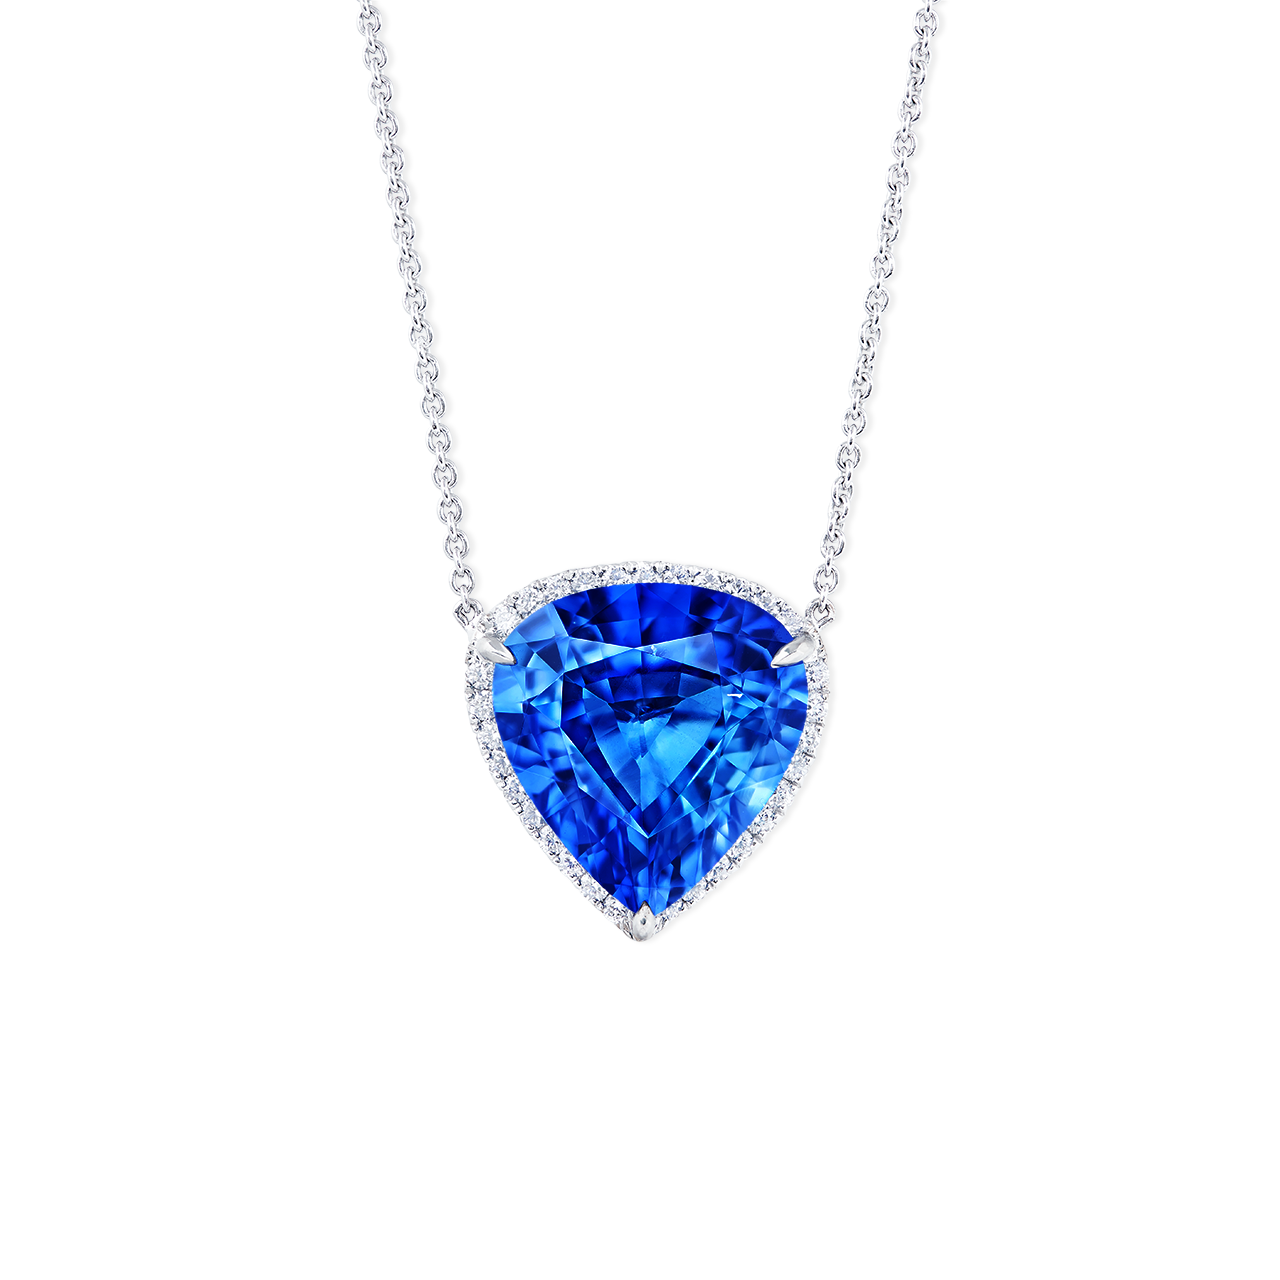 GIA 11.57克拉 天然無燒藍寶石墜鍊
Blue Sapphire and 
Diamond Pendant Necklace